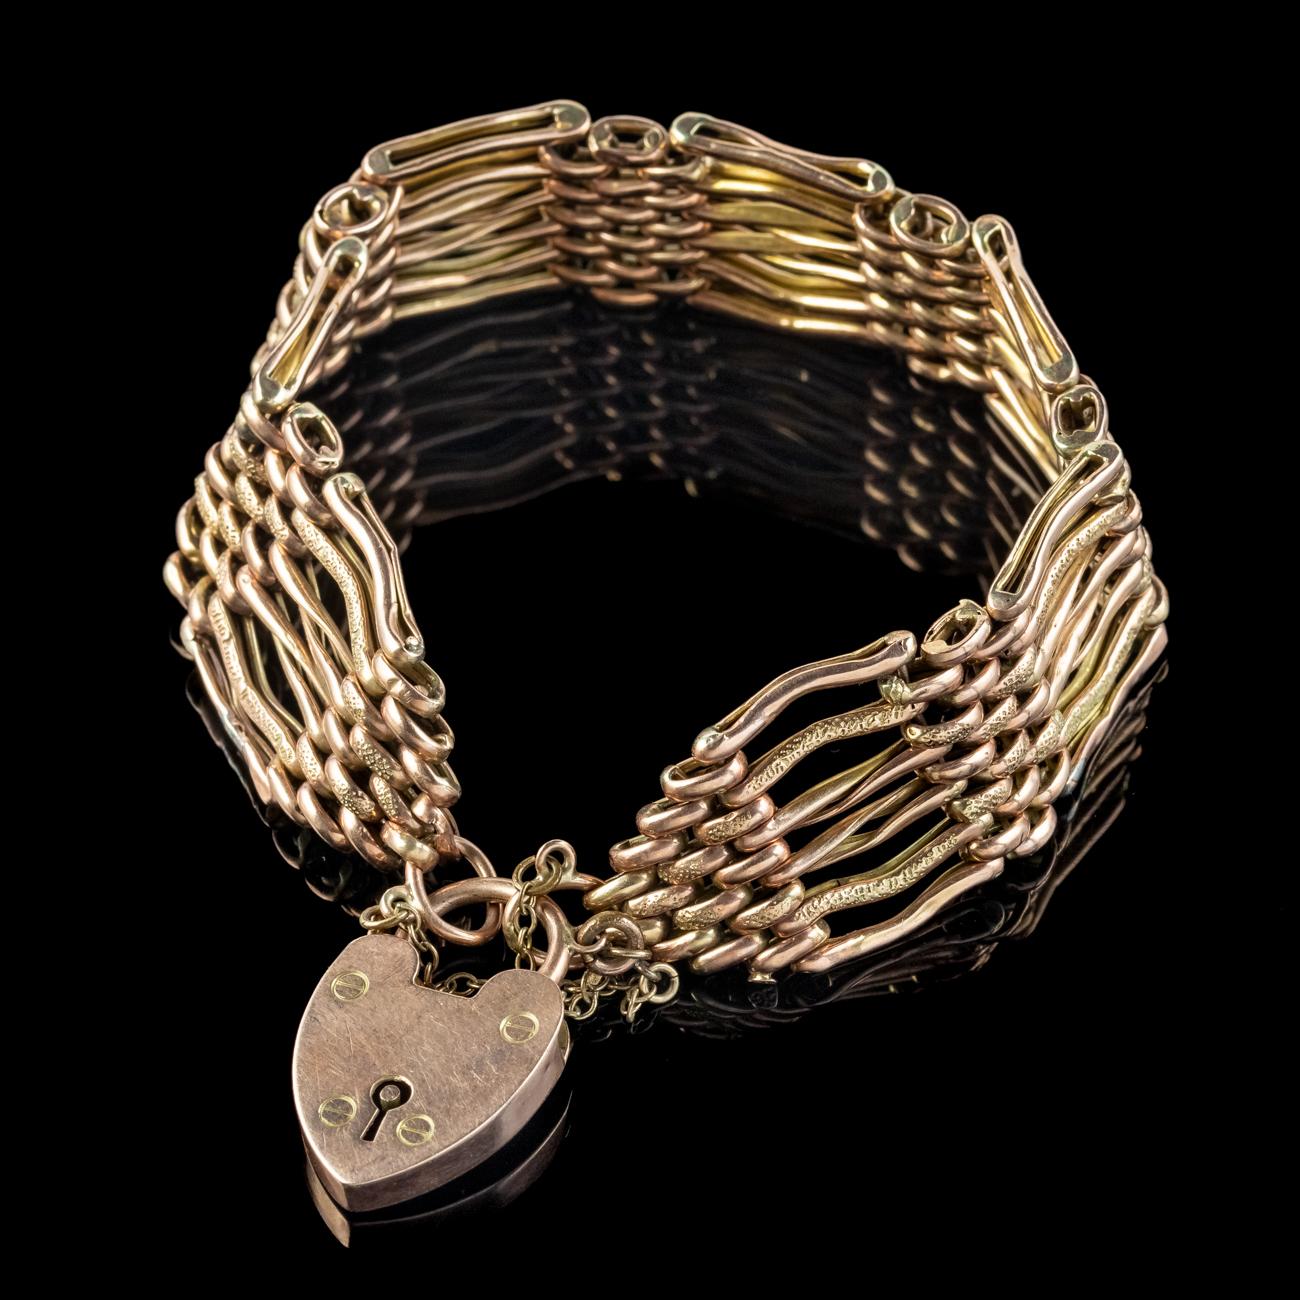 9ct gold gate bracelet with padlock